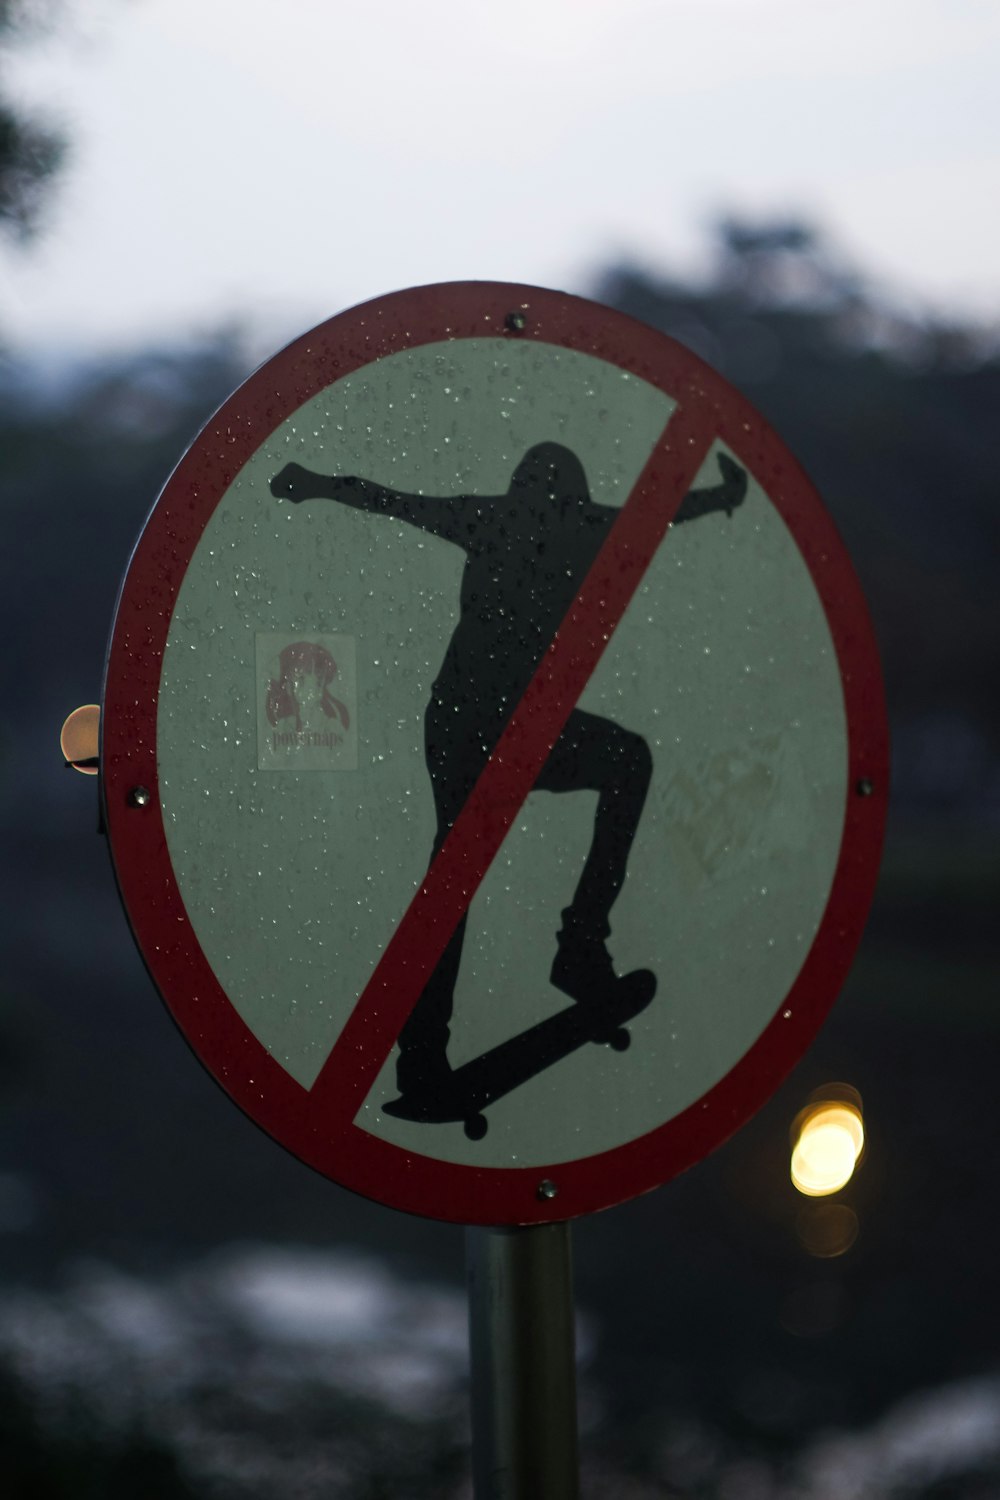 a no skateboarding sign on a pole